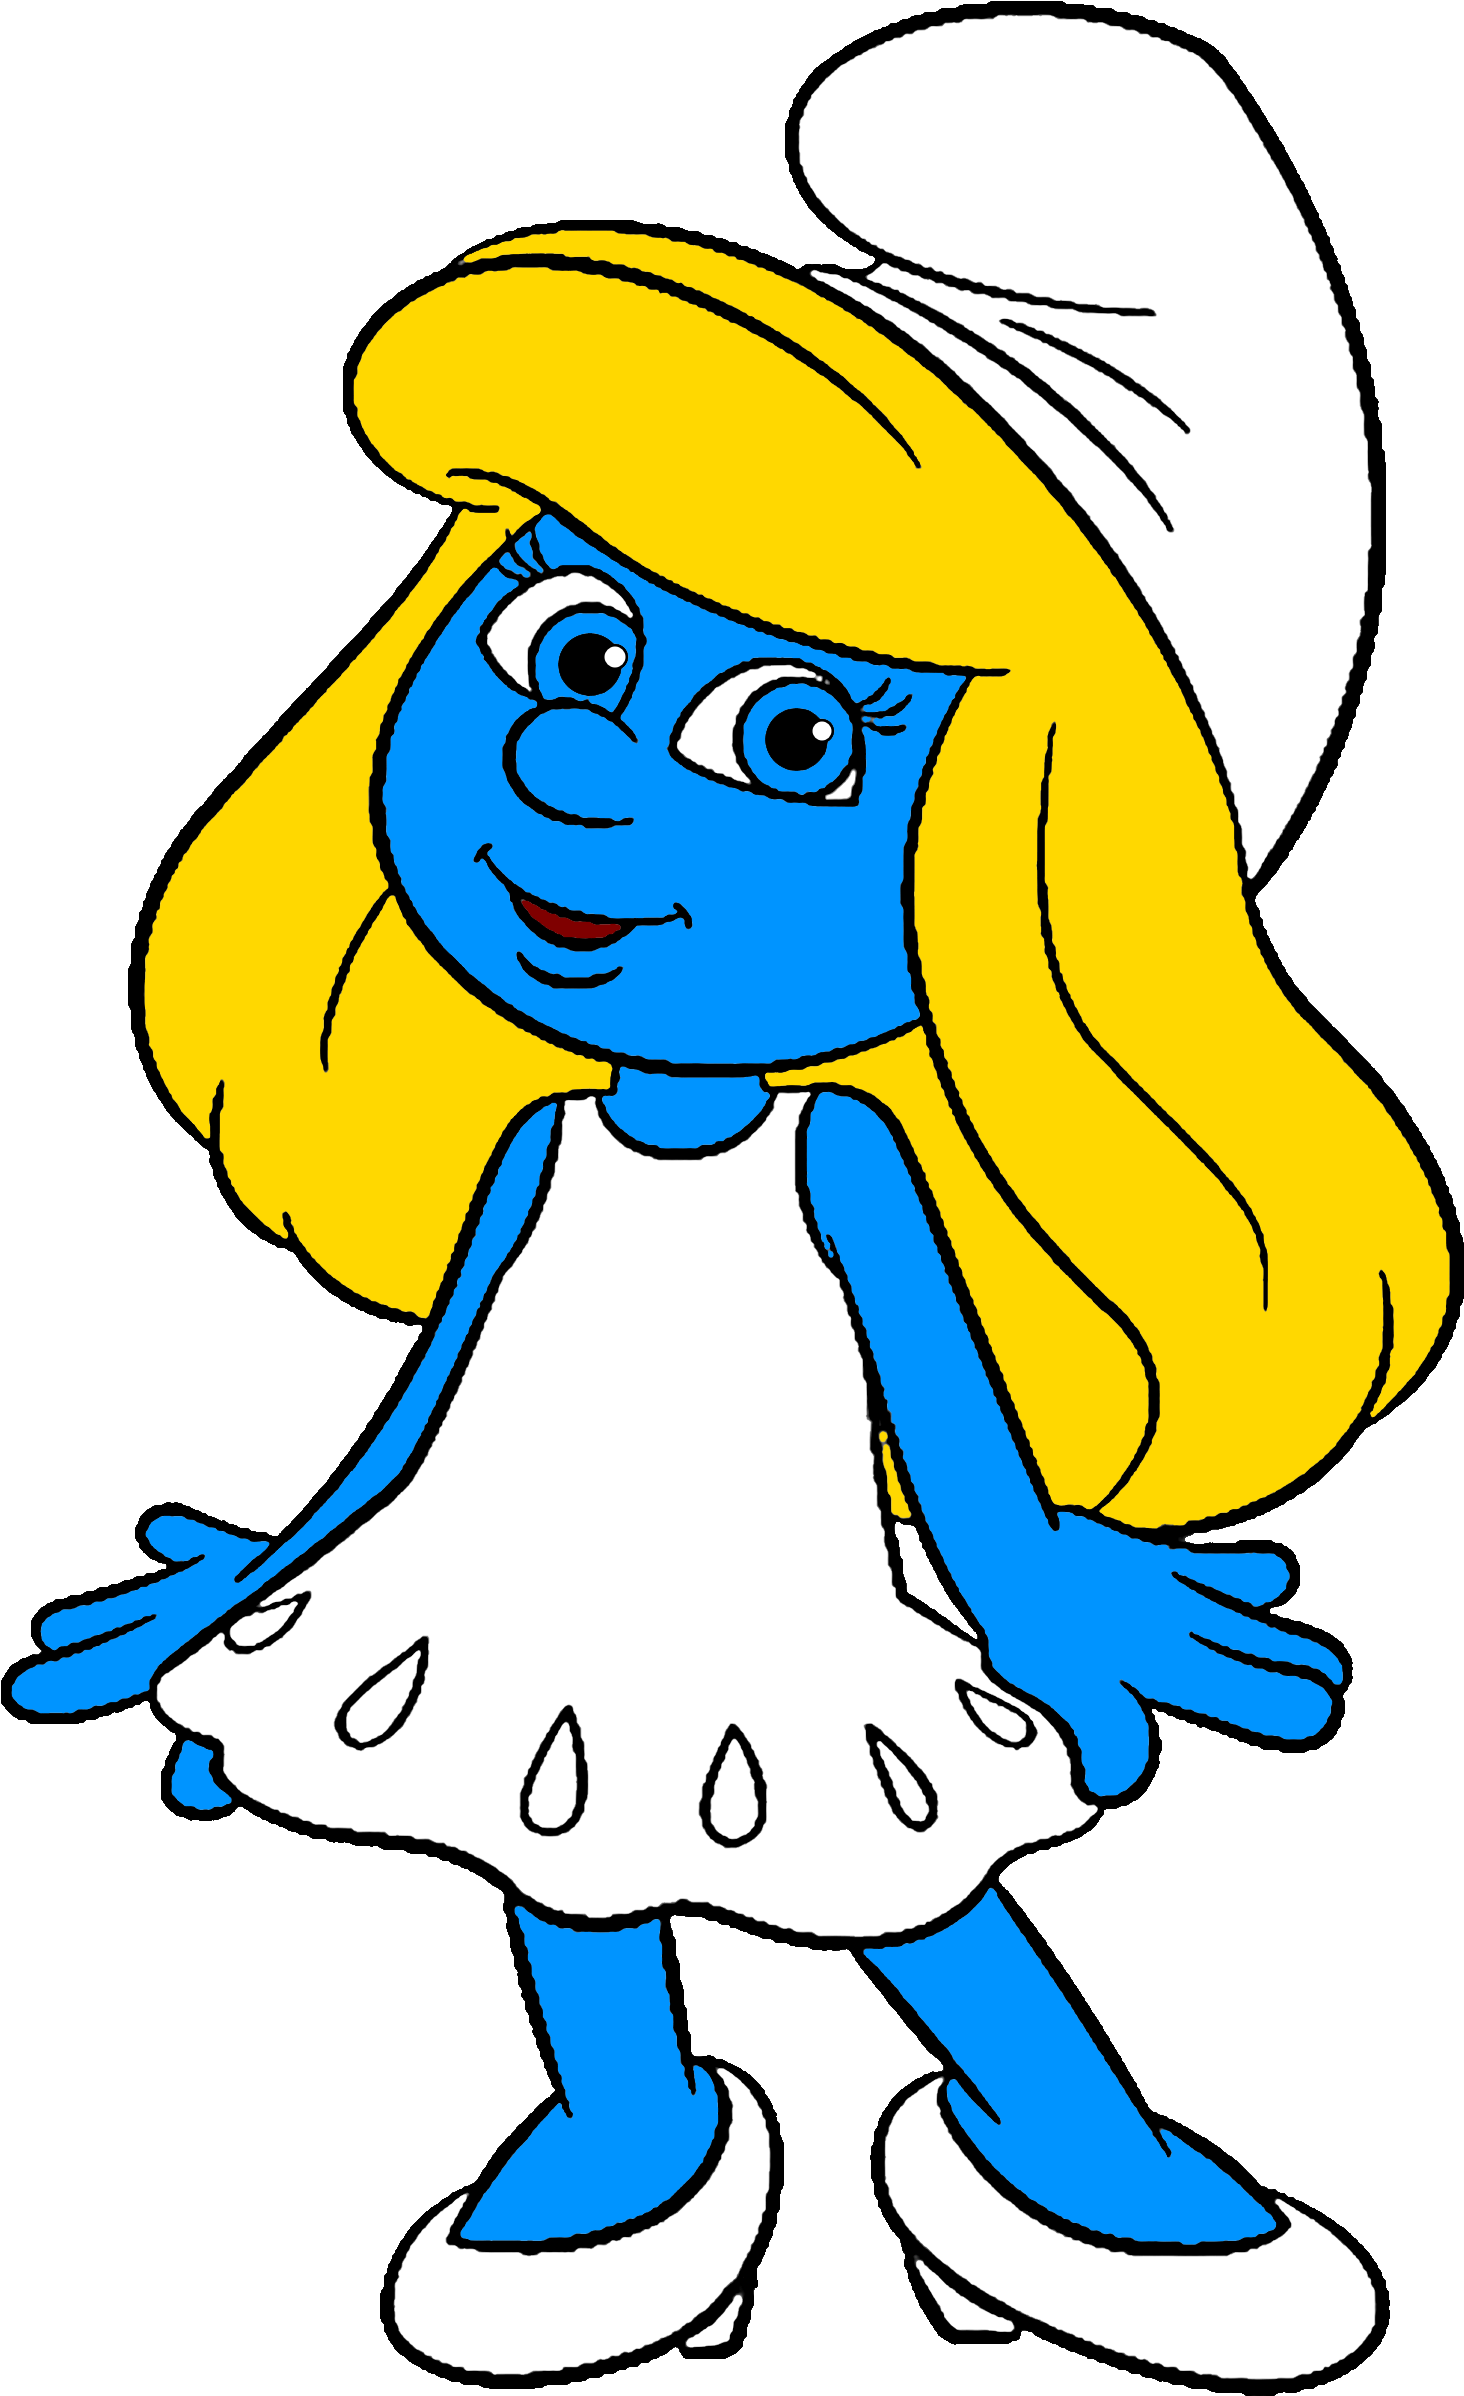 Download 4 Kbytes, On The Desktop - Smurfs Cartoon Png PNG Image with ...